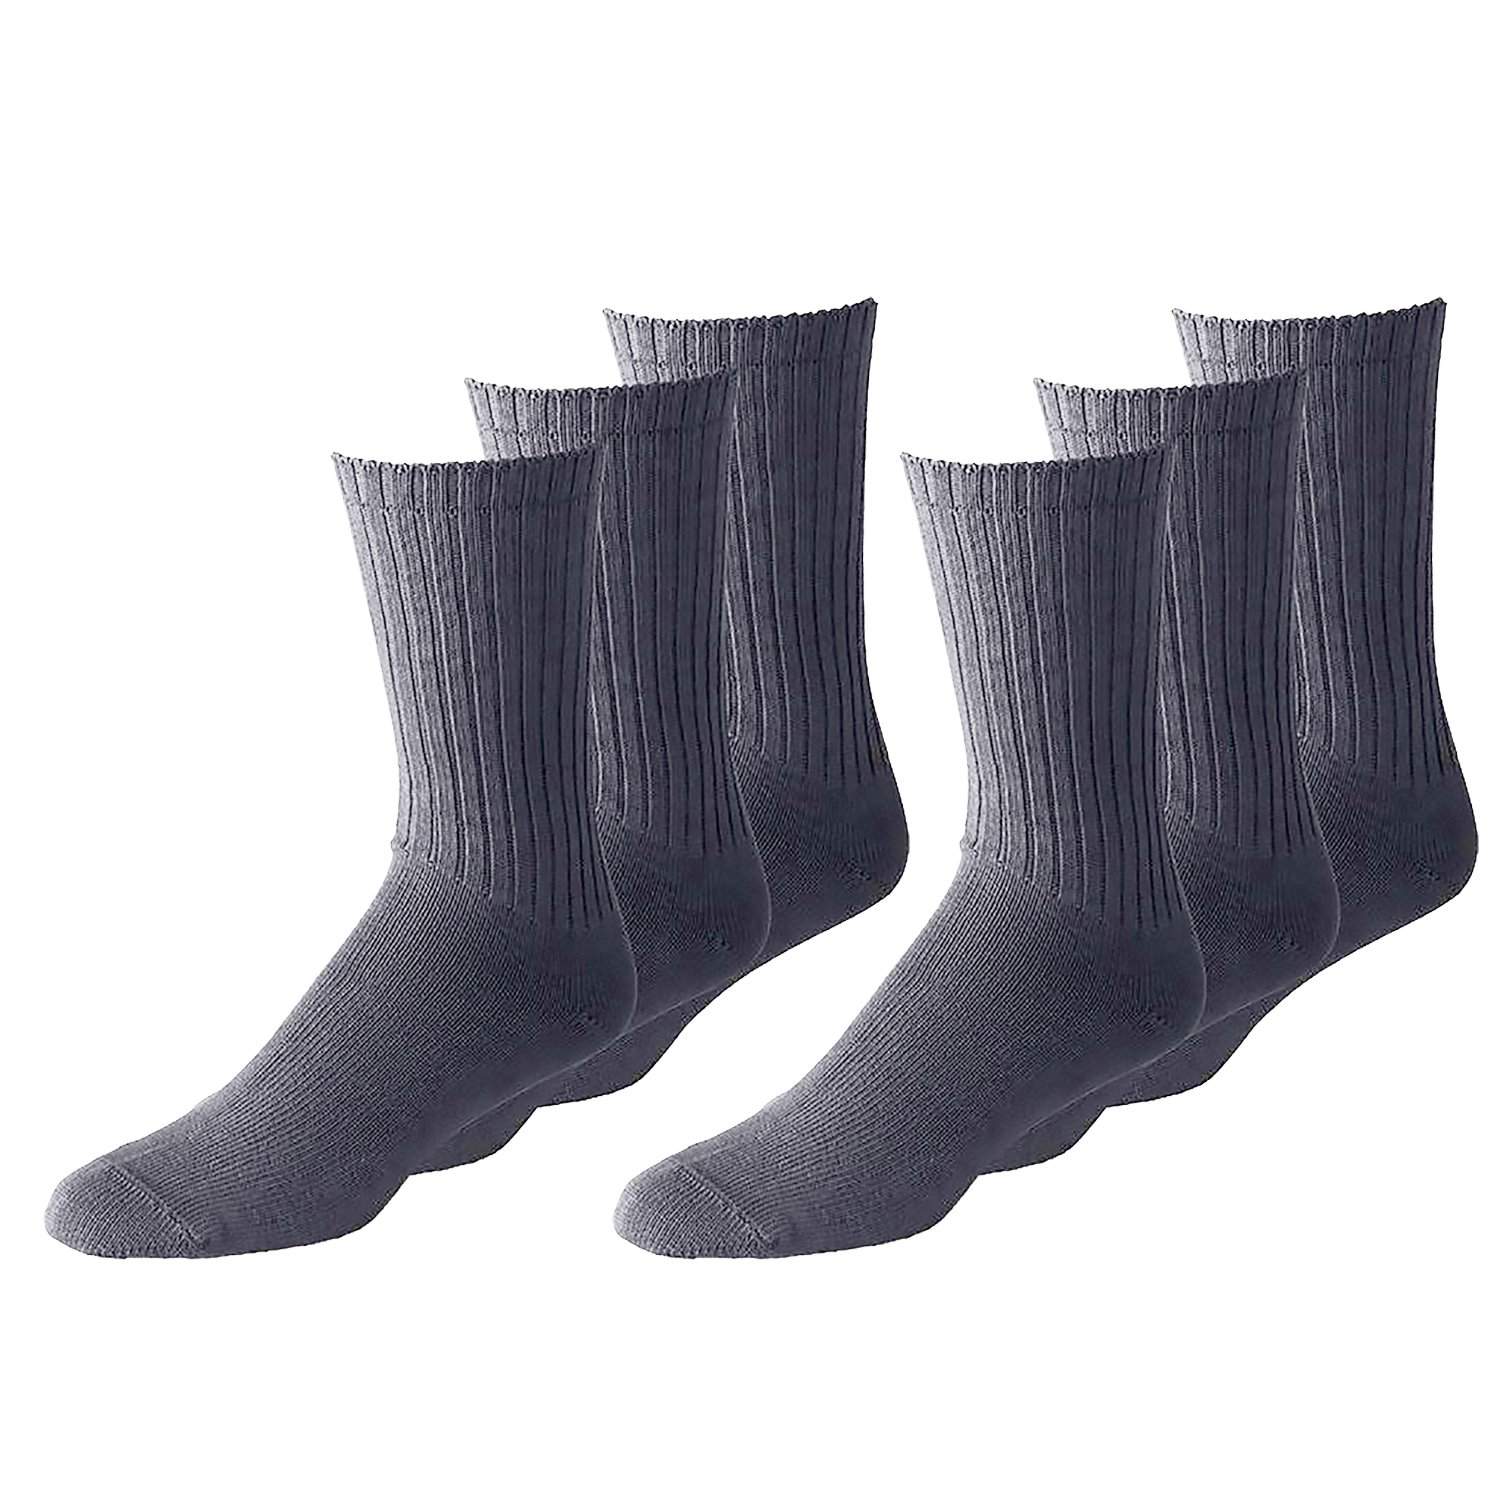 12 Pairs Men's Athletic Crew Socks - Bulk Wholesale Packs - Any Shoe Size